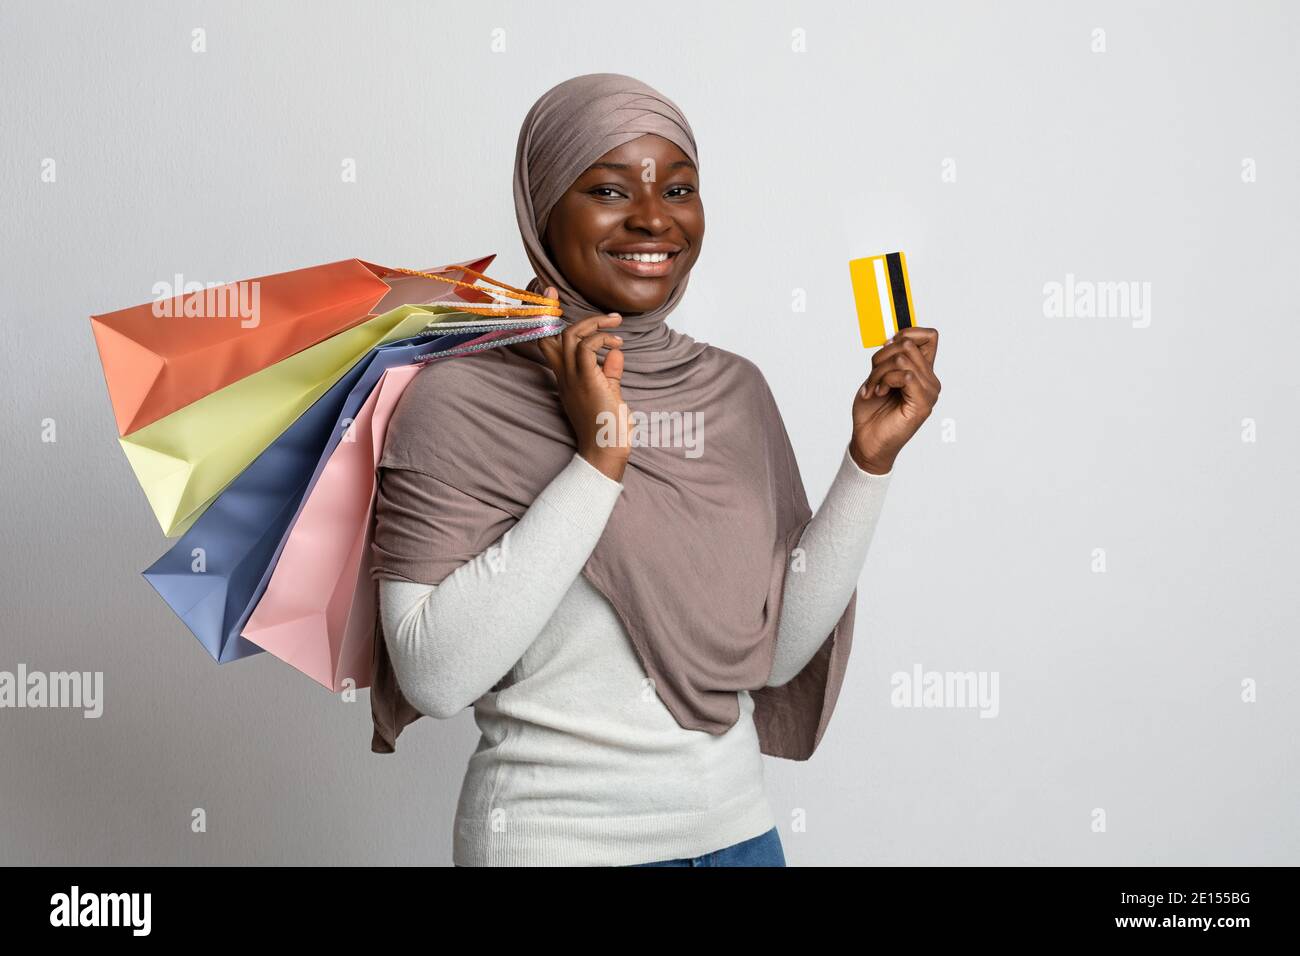 Joyful Black Muslim Shopaholic Woman Posing With Shopping Bags And Credit Card Stock Photo